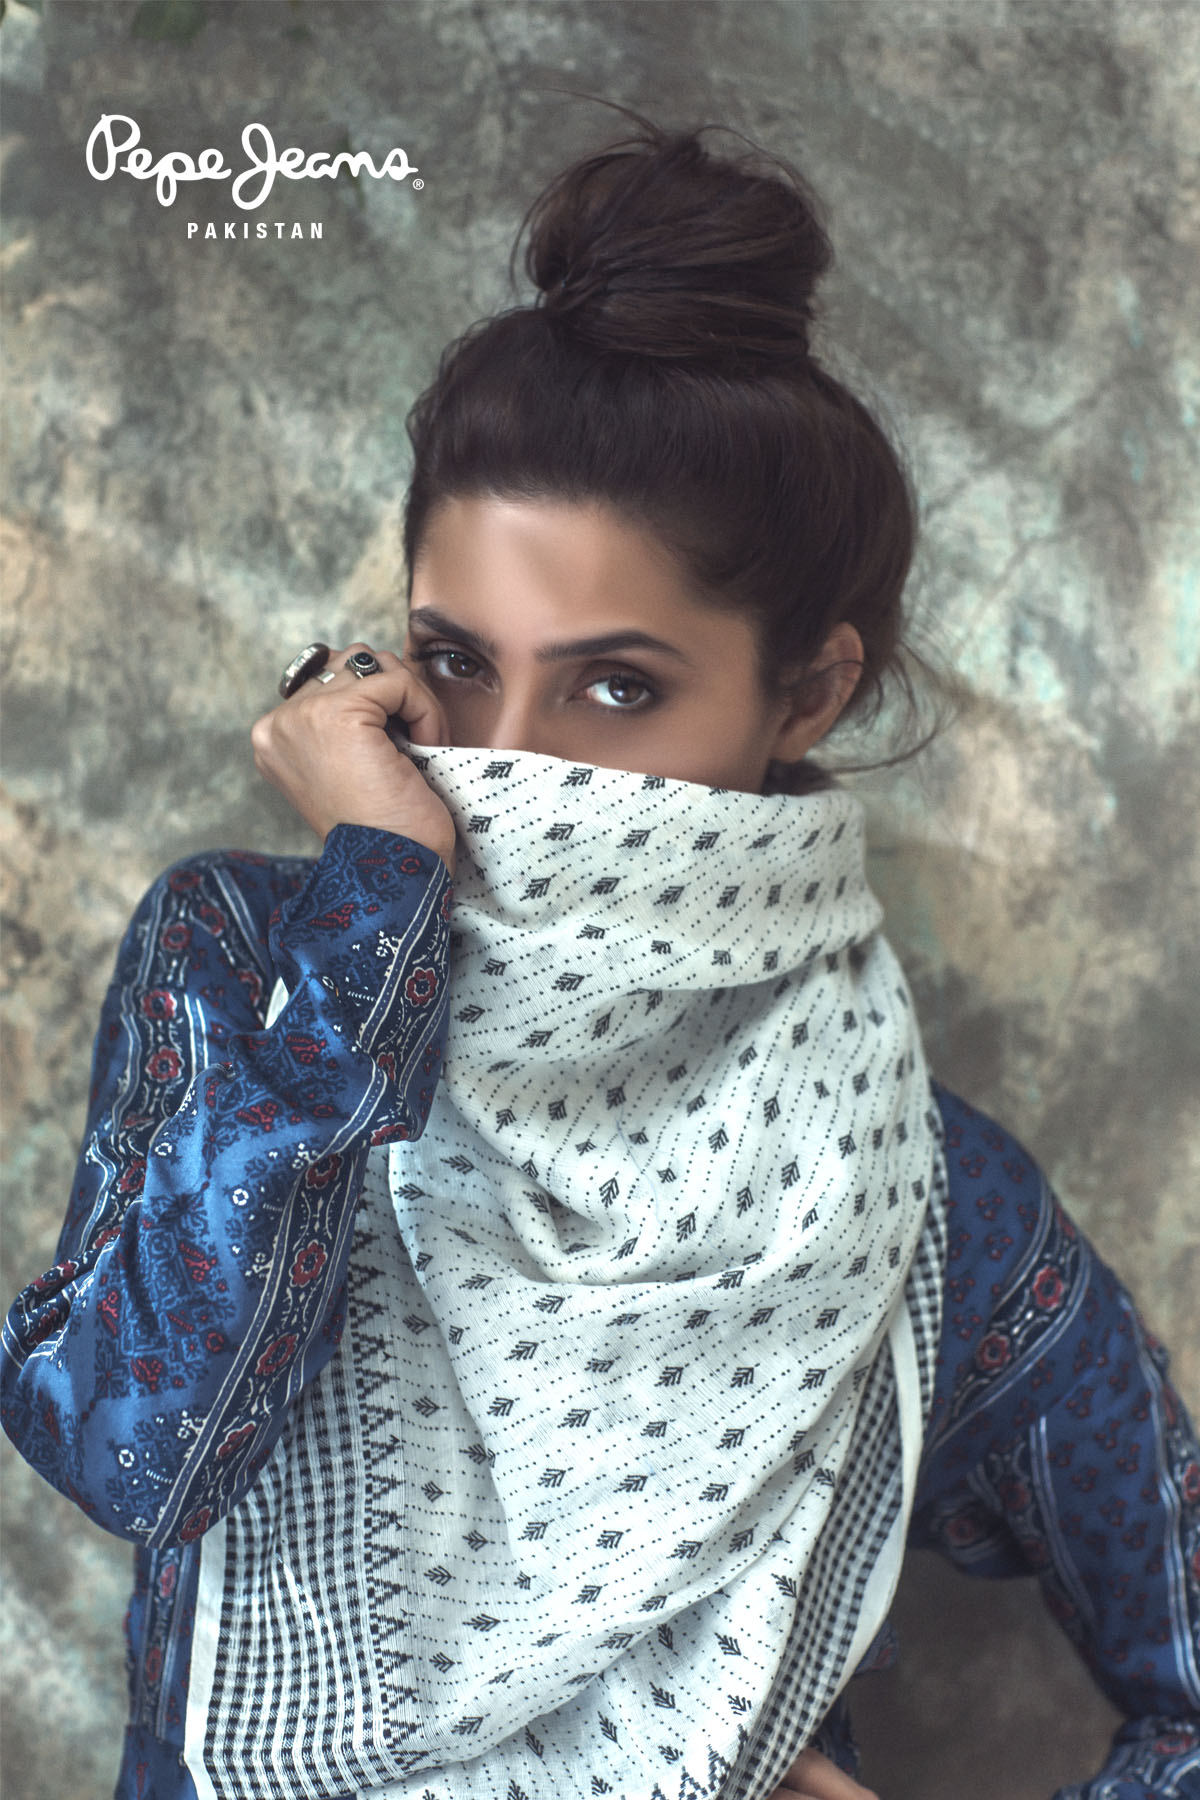 Mahira Khan for Pepe Jeans Pakistan Winter 2015 Campaign - #MKLovesPepe (14)